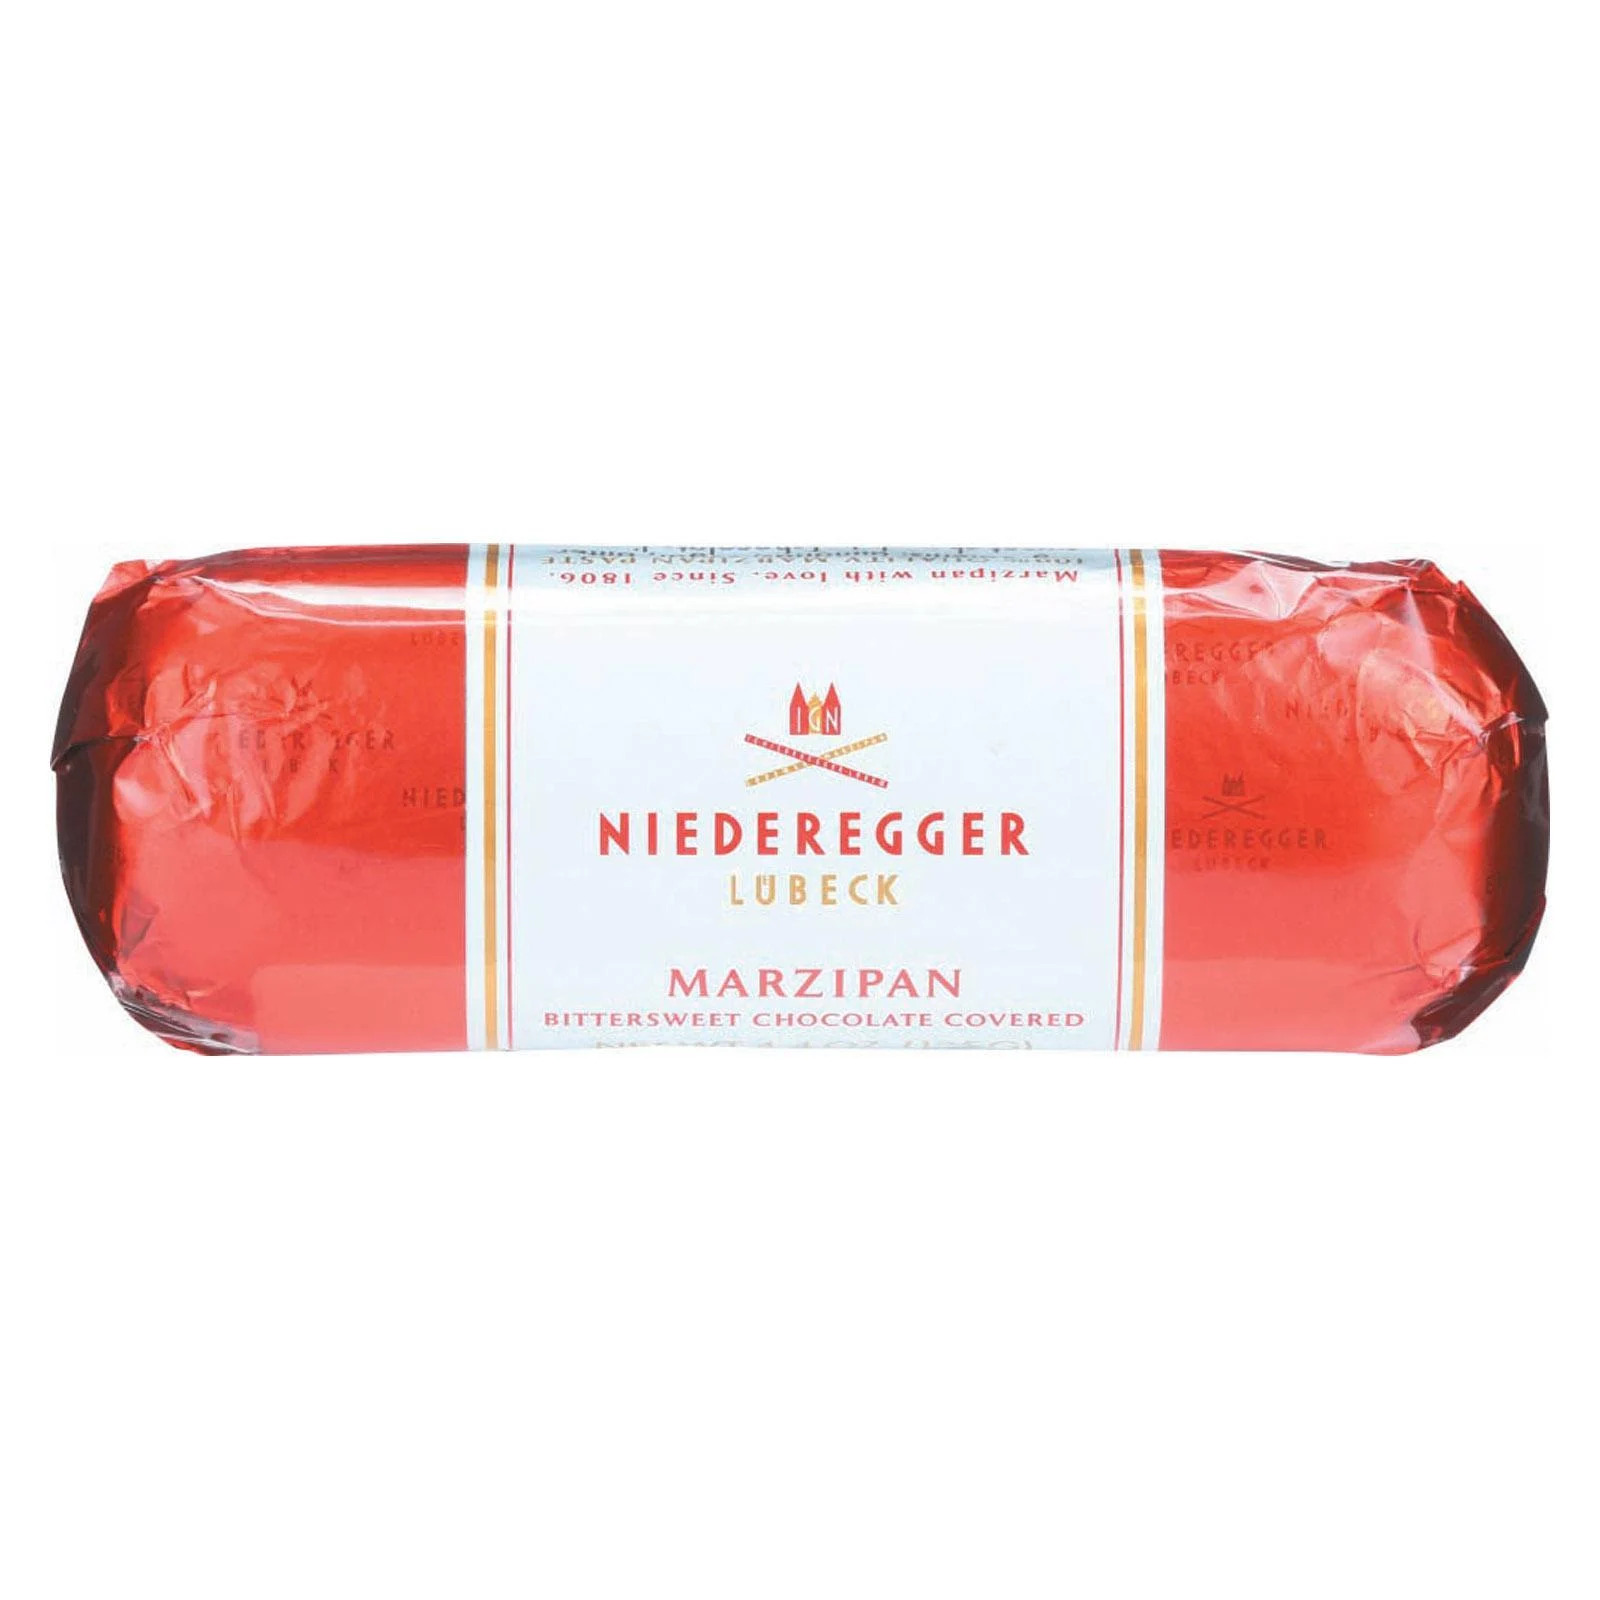 Niederegger Chocolate Covered Marzipan (125g)